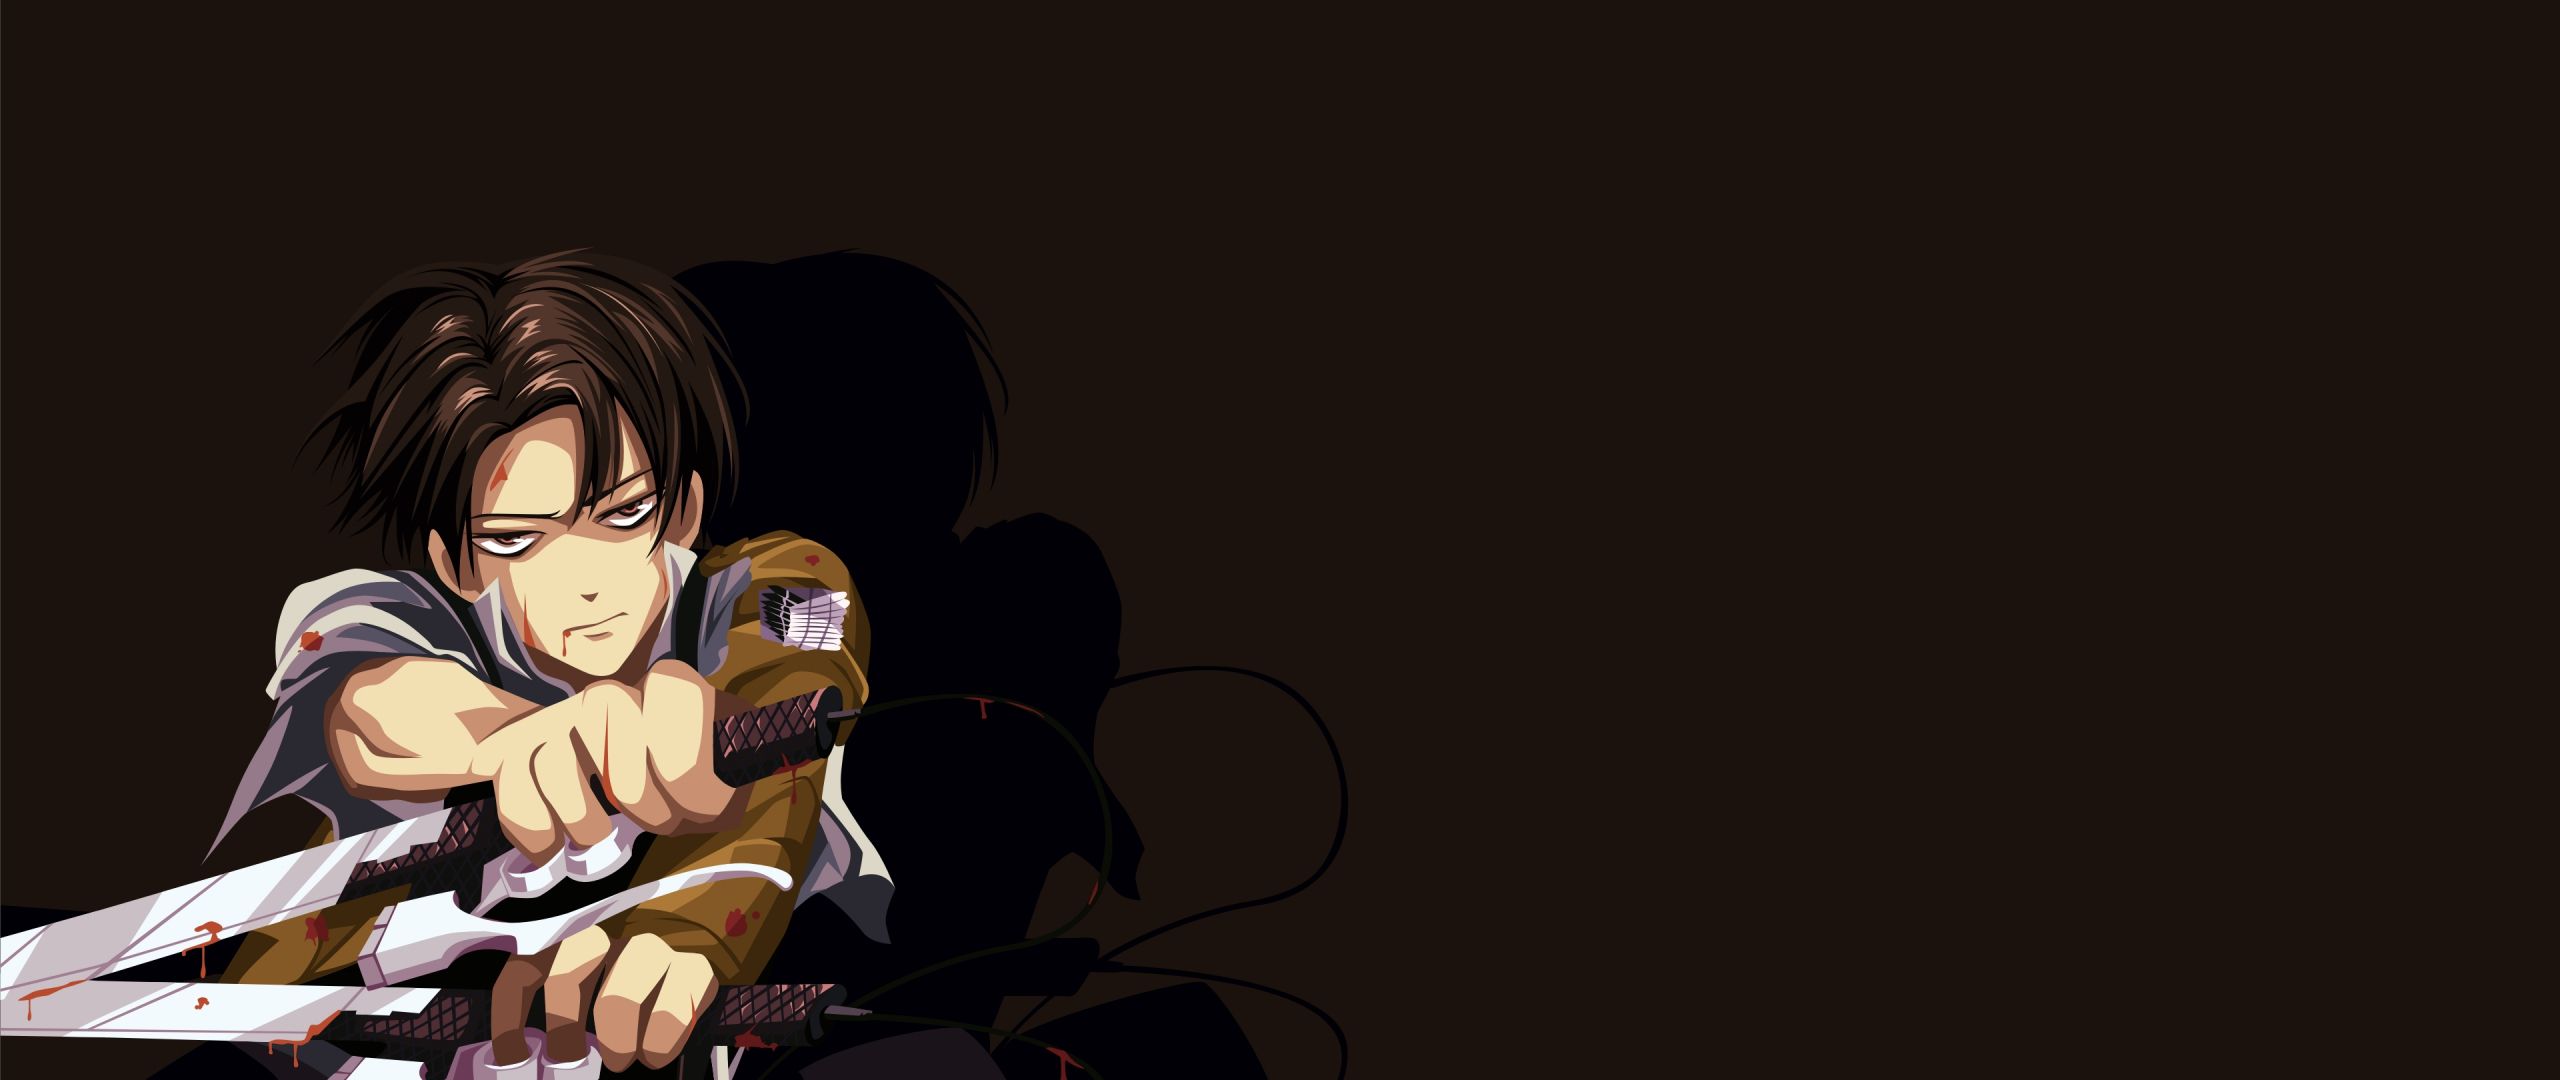 Desktop Wallpaper Anime Boy, Levi Ackerman, Attack On Titan, HD Image, Picture, Background, Cylb F